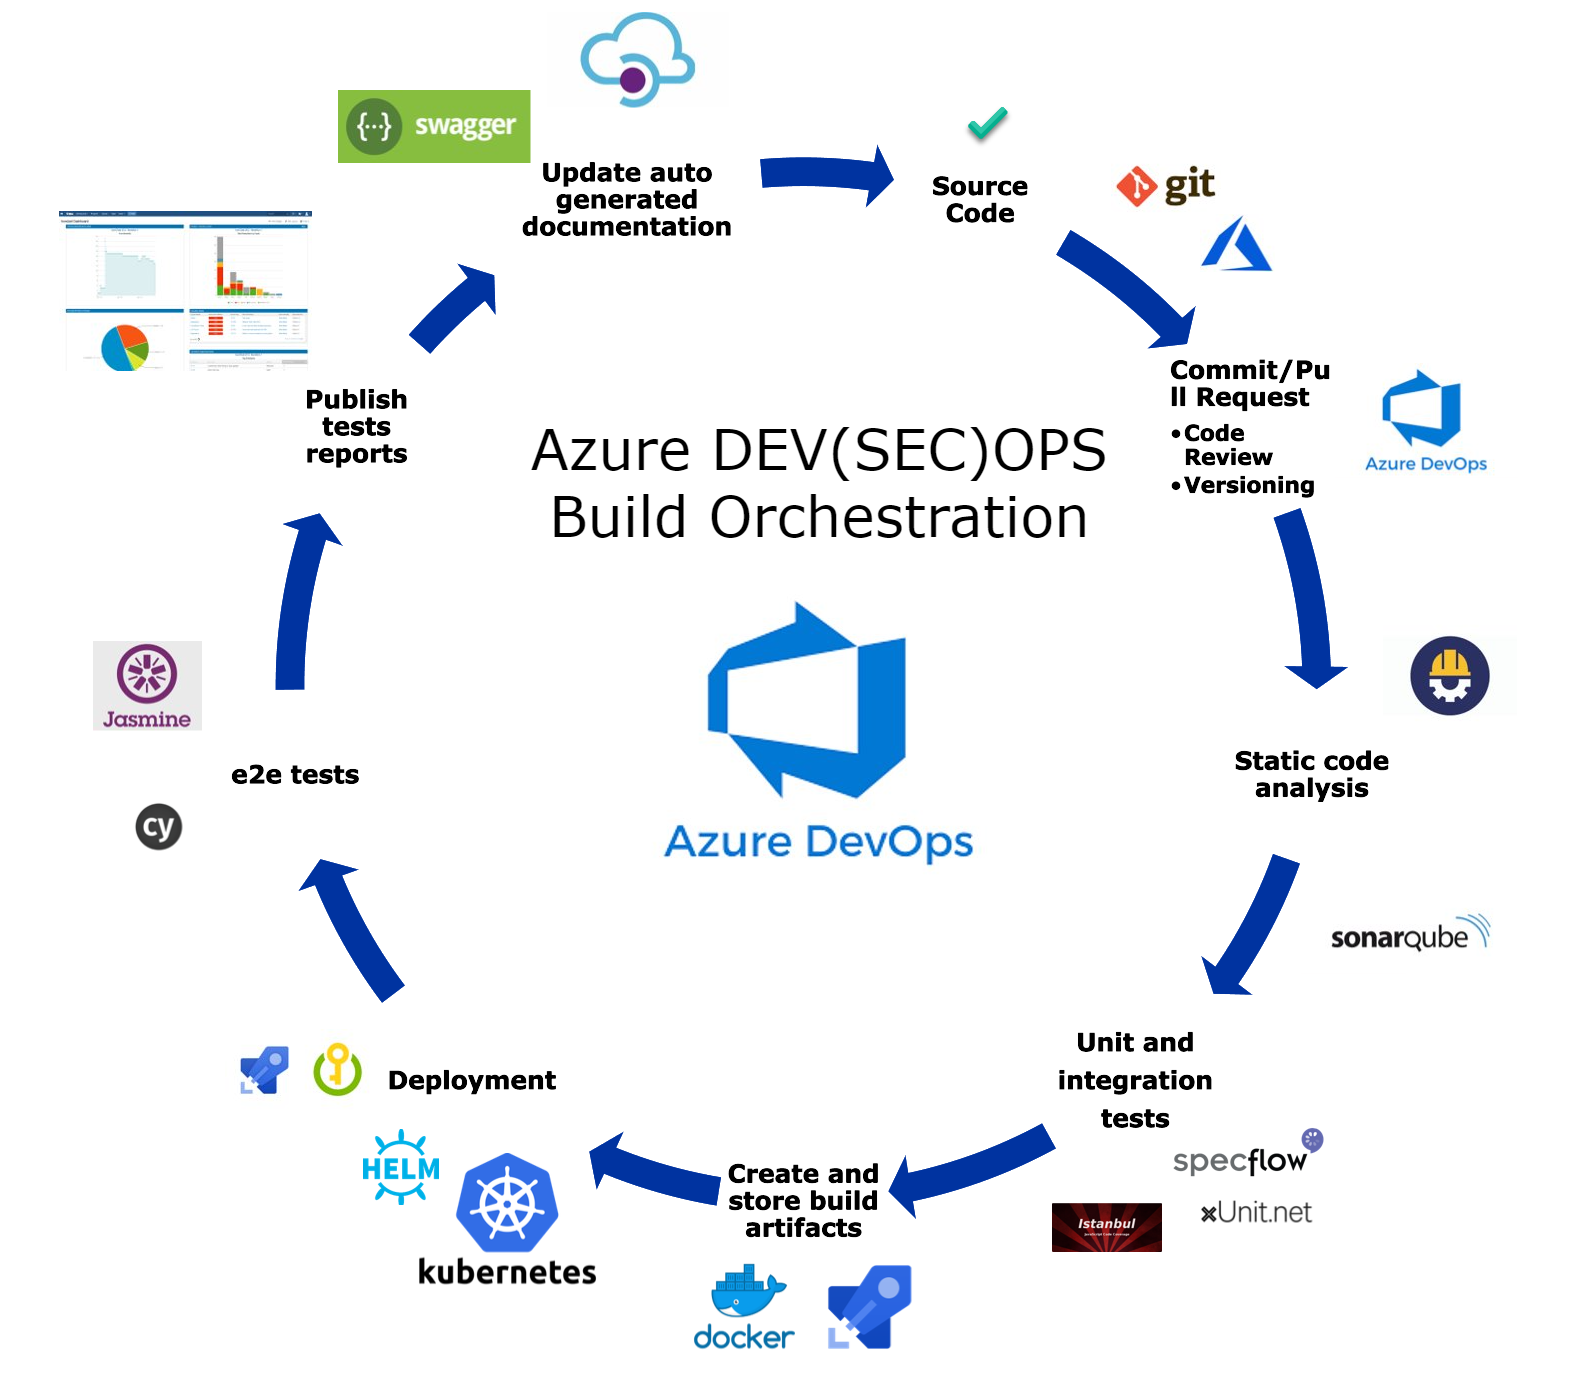 Azure explained deep enough: Azure DevOps | by Piotr | ITNEXT